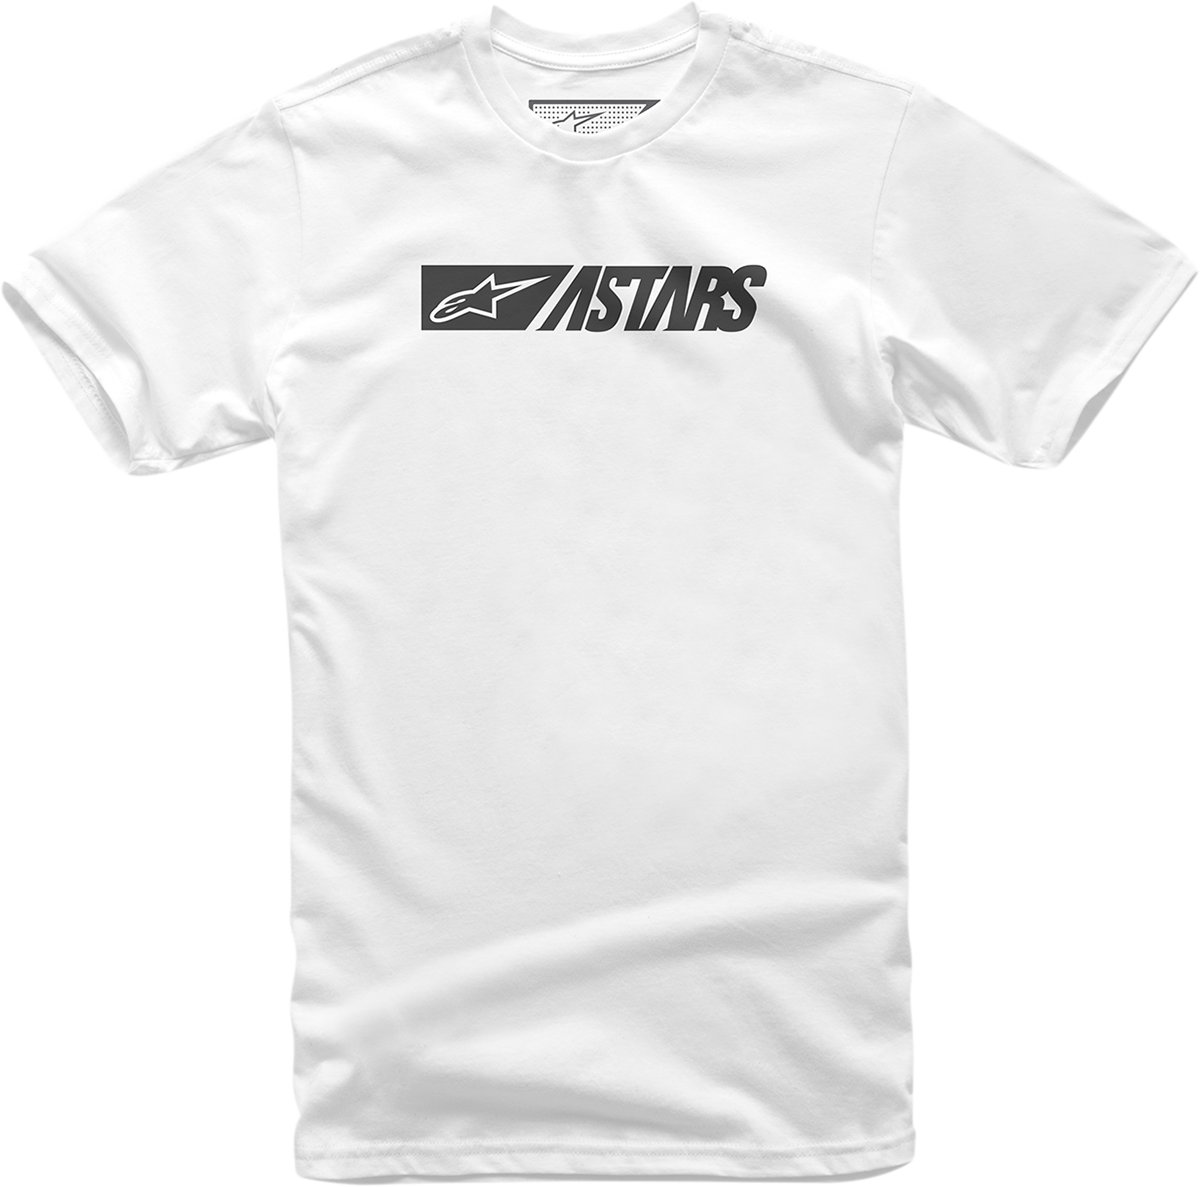 Reblaze T-Shirt - White - Medium